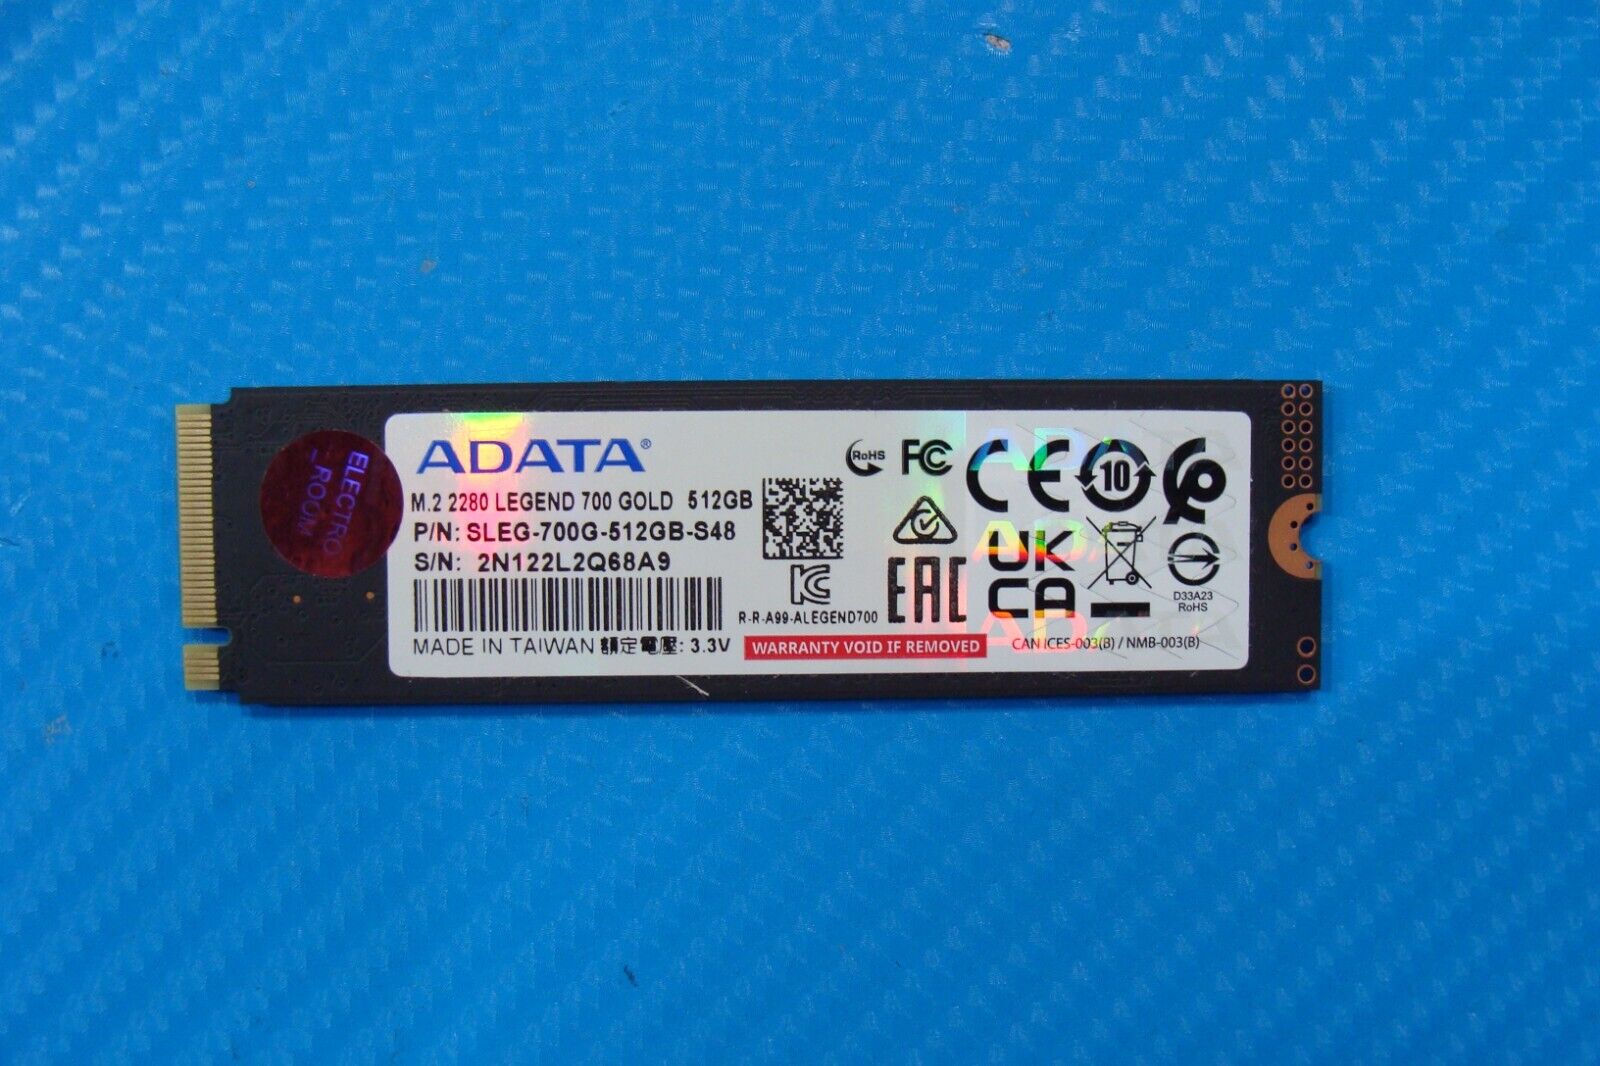 HP 15-dy4013dx ADATA 512GB NVMe M.2 SSD Solid State Drive SLEG-700G-512GB-S48